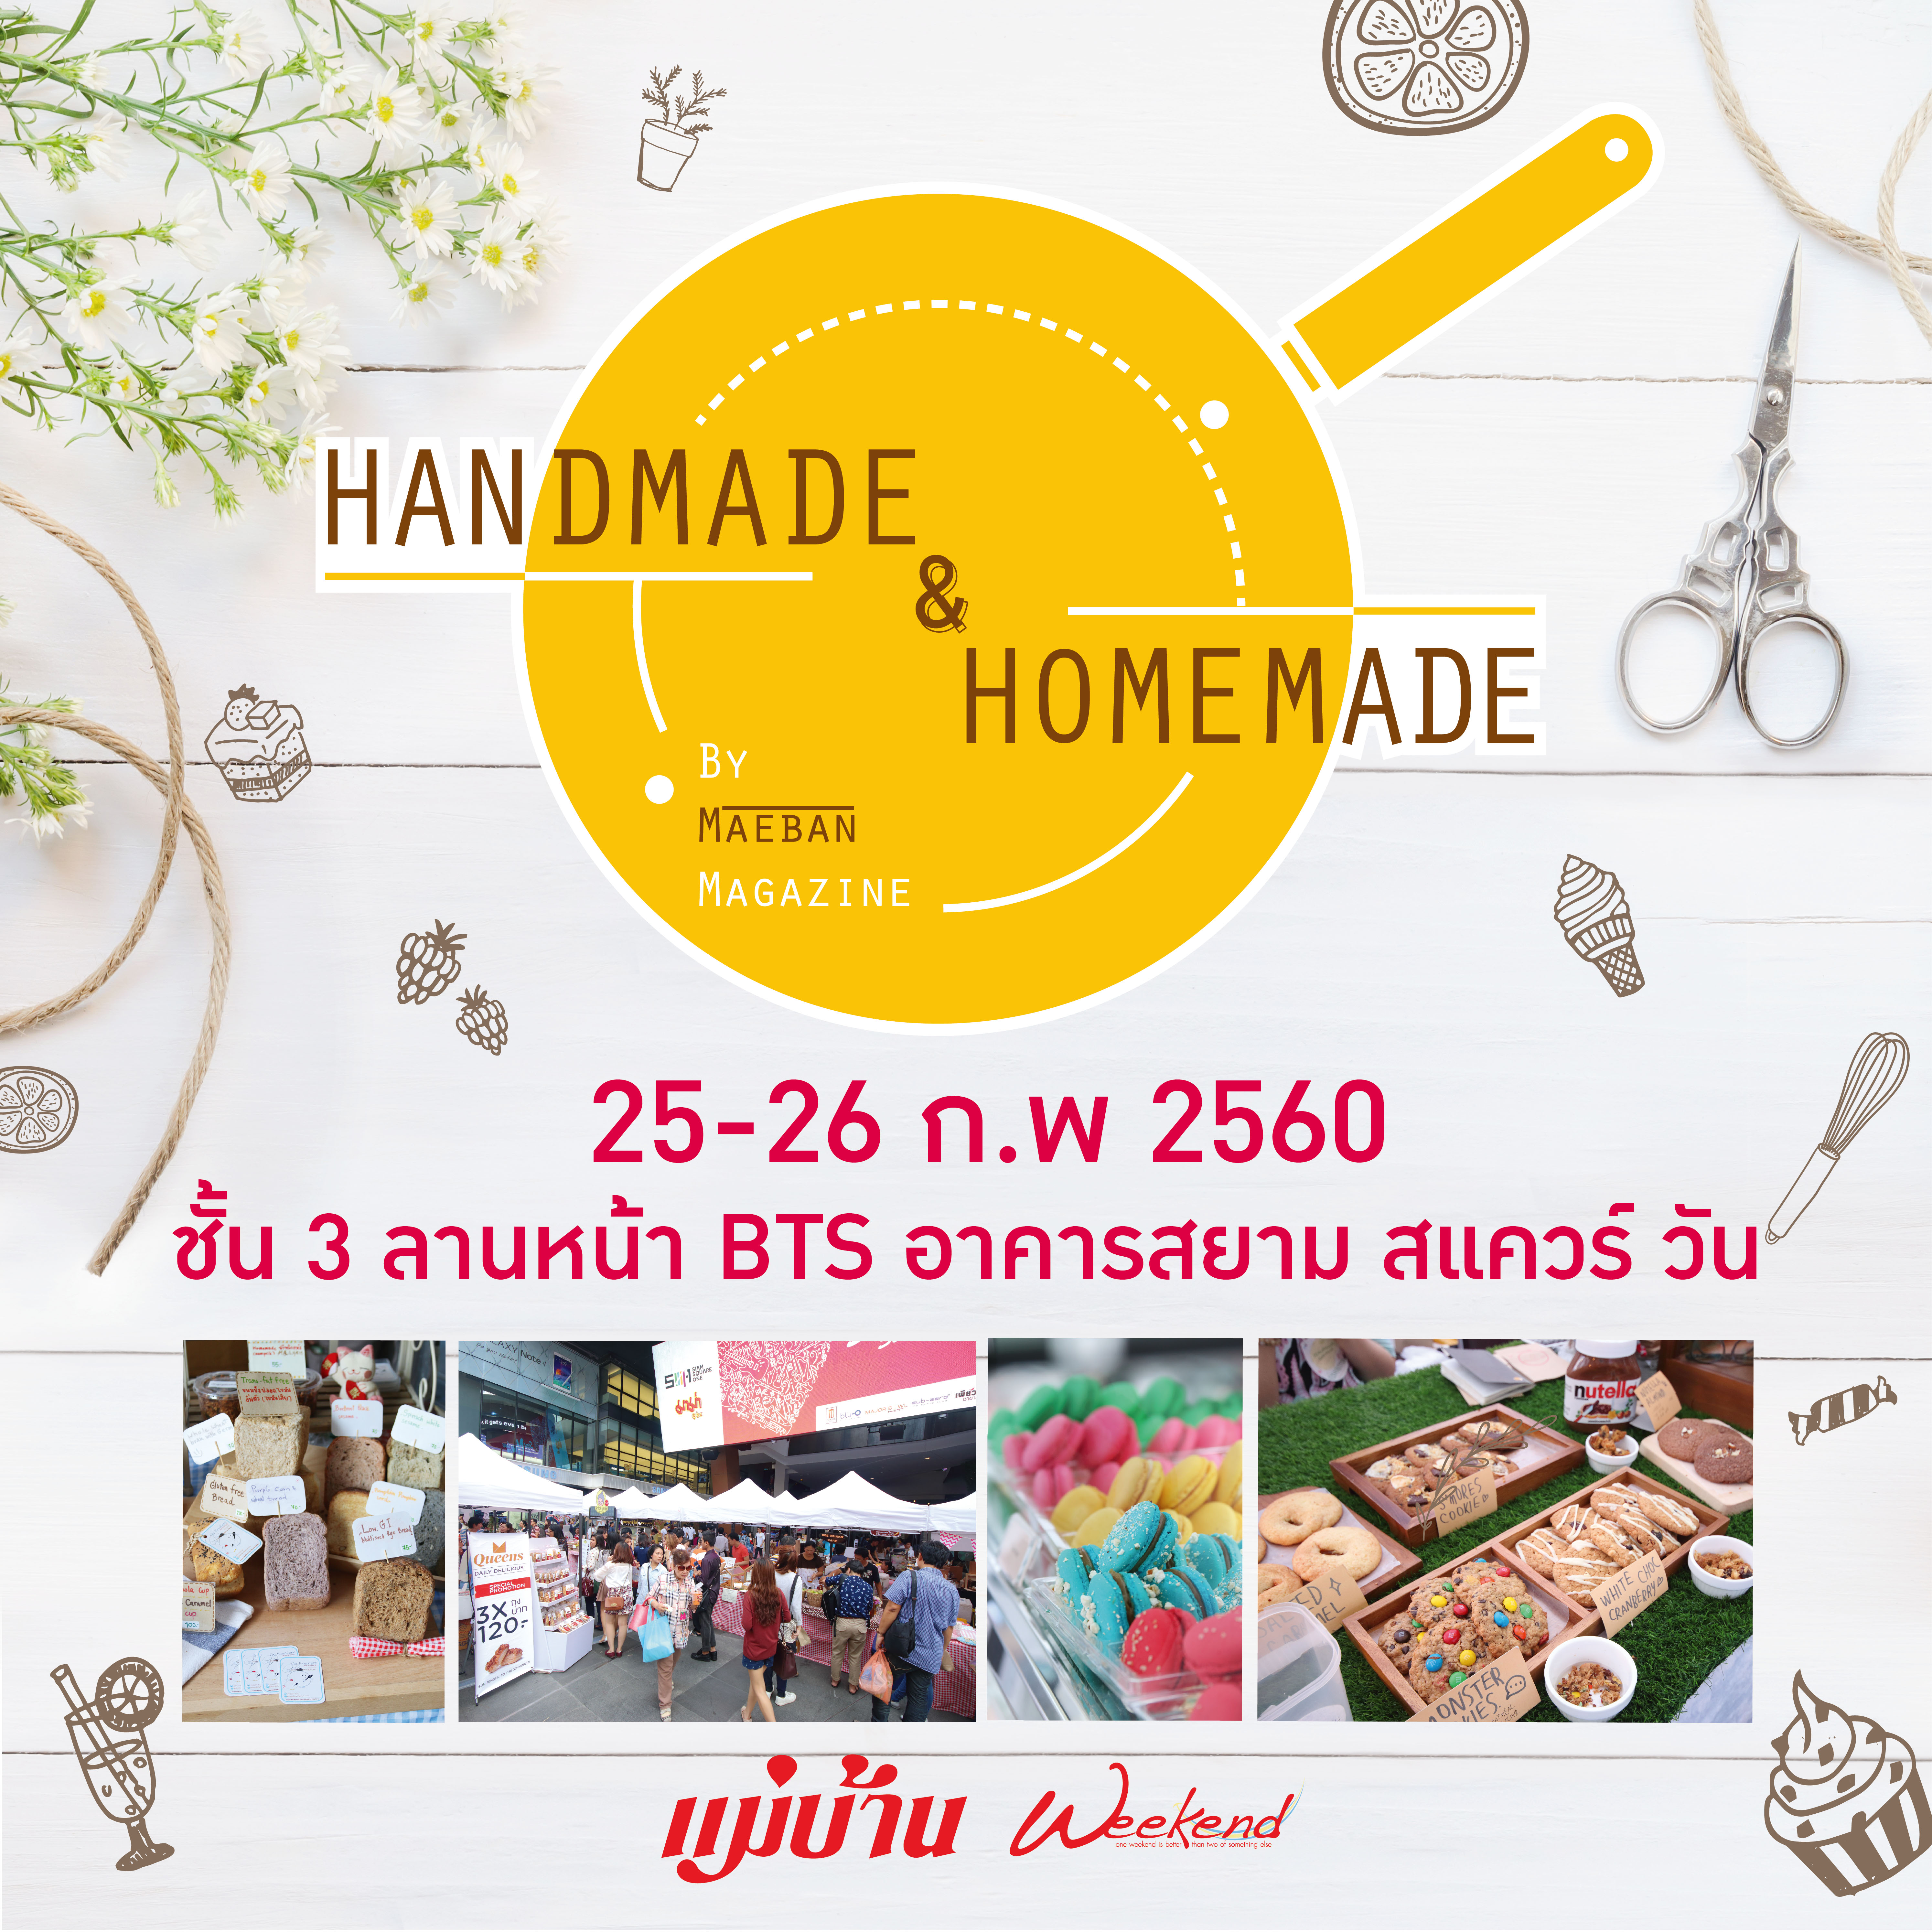 Handmade&Homemade @Siam Square One 25-26 กุมภาพันธ์ 2560